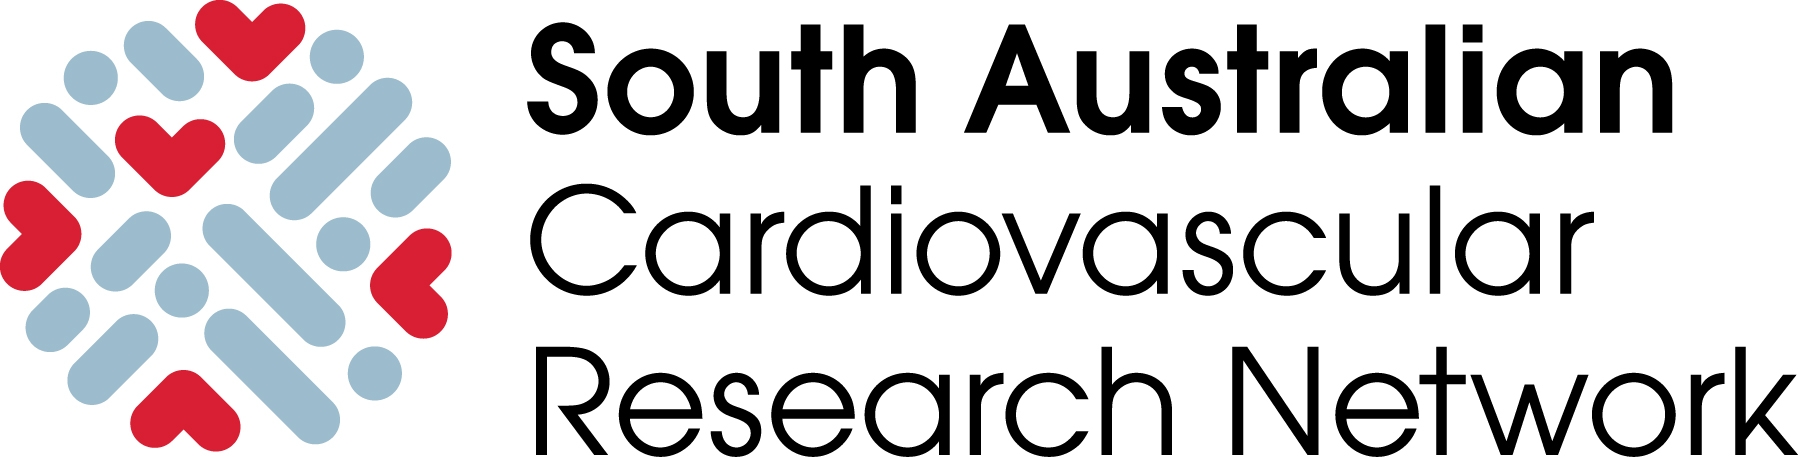 South Australian Cardiovascular Research Network (SA CVRN)